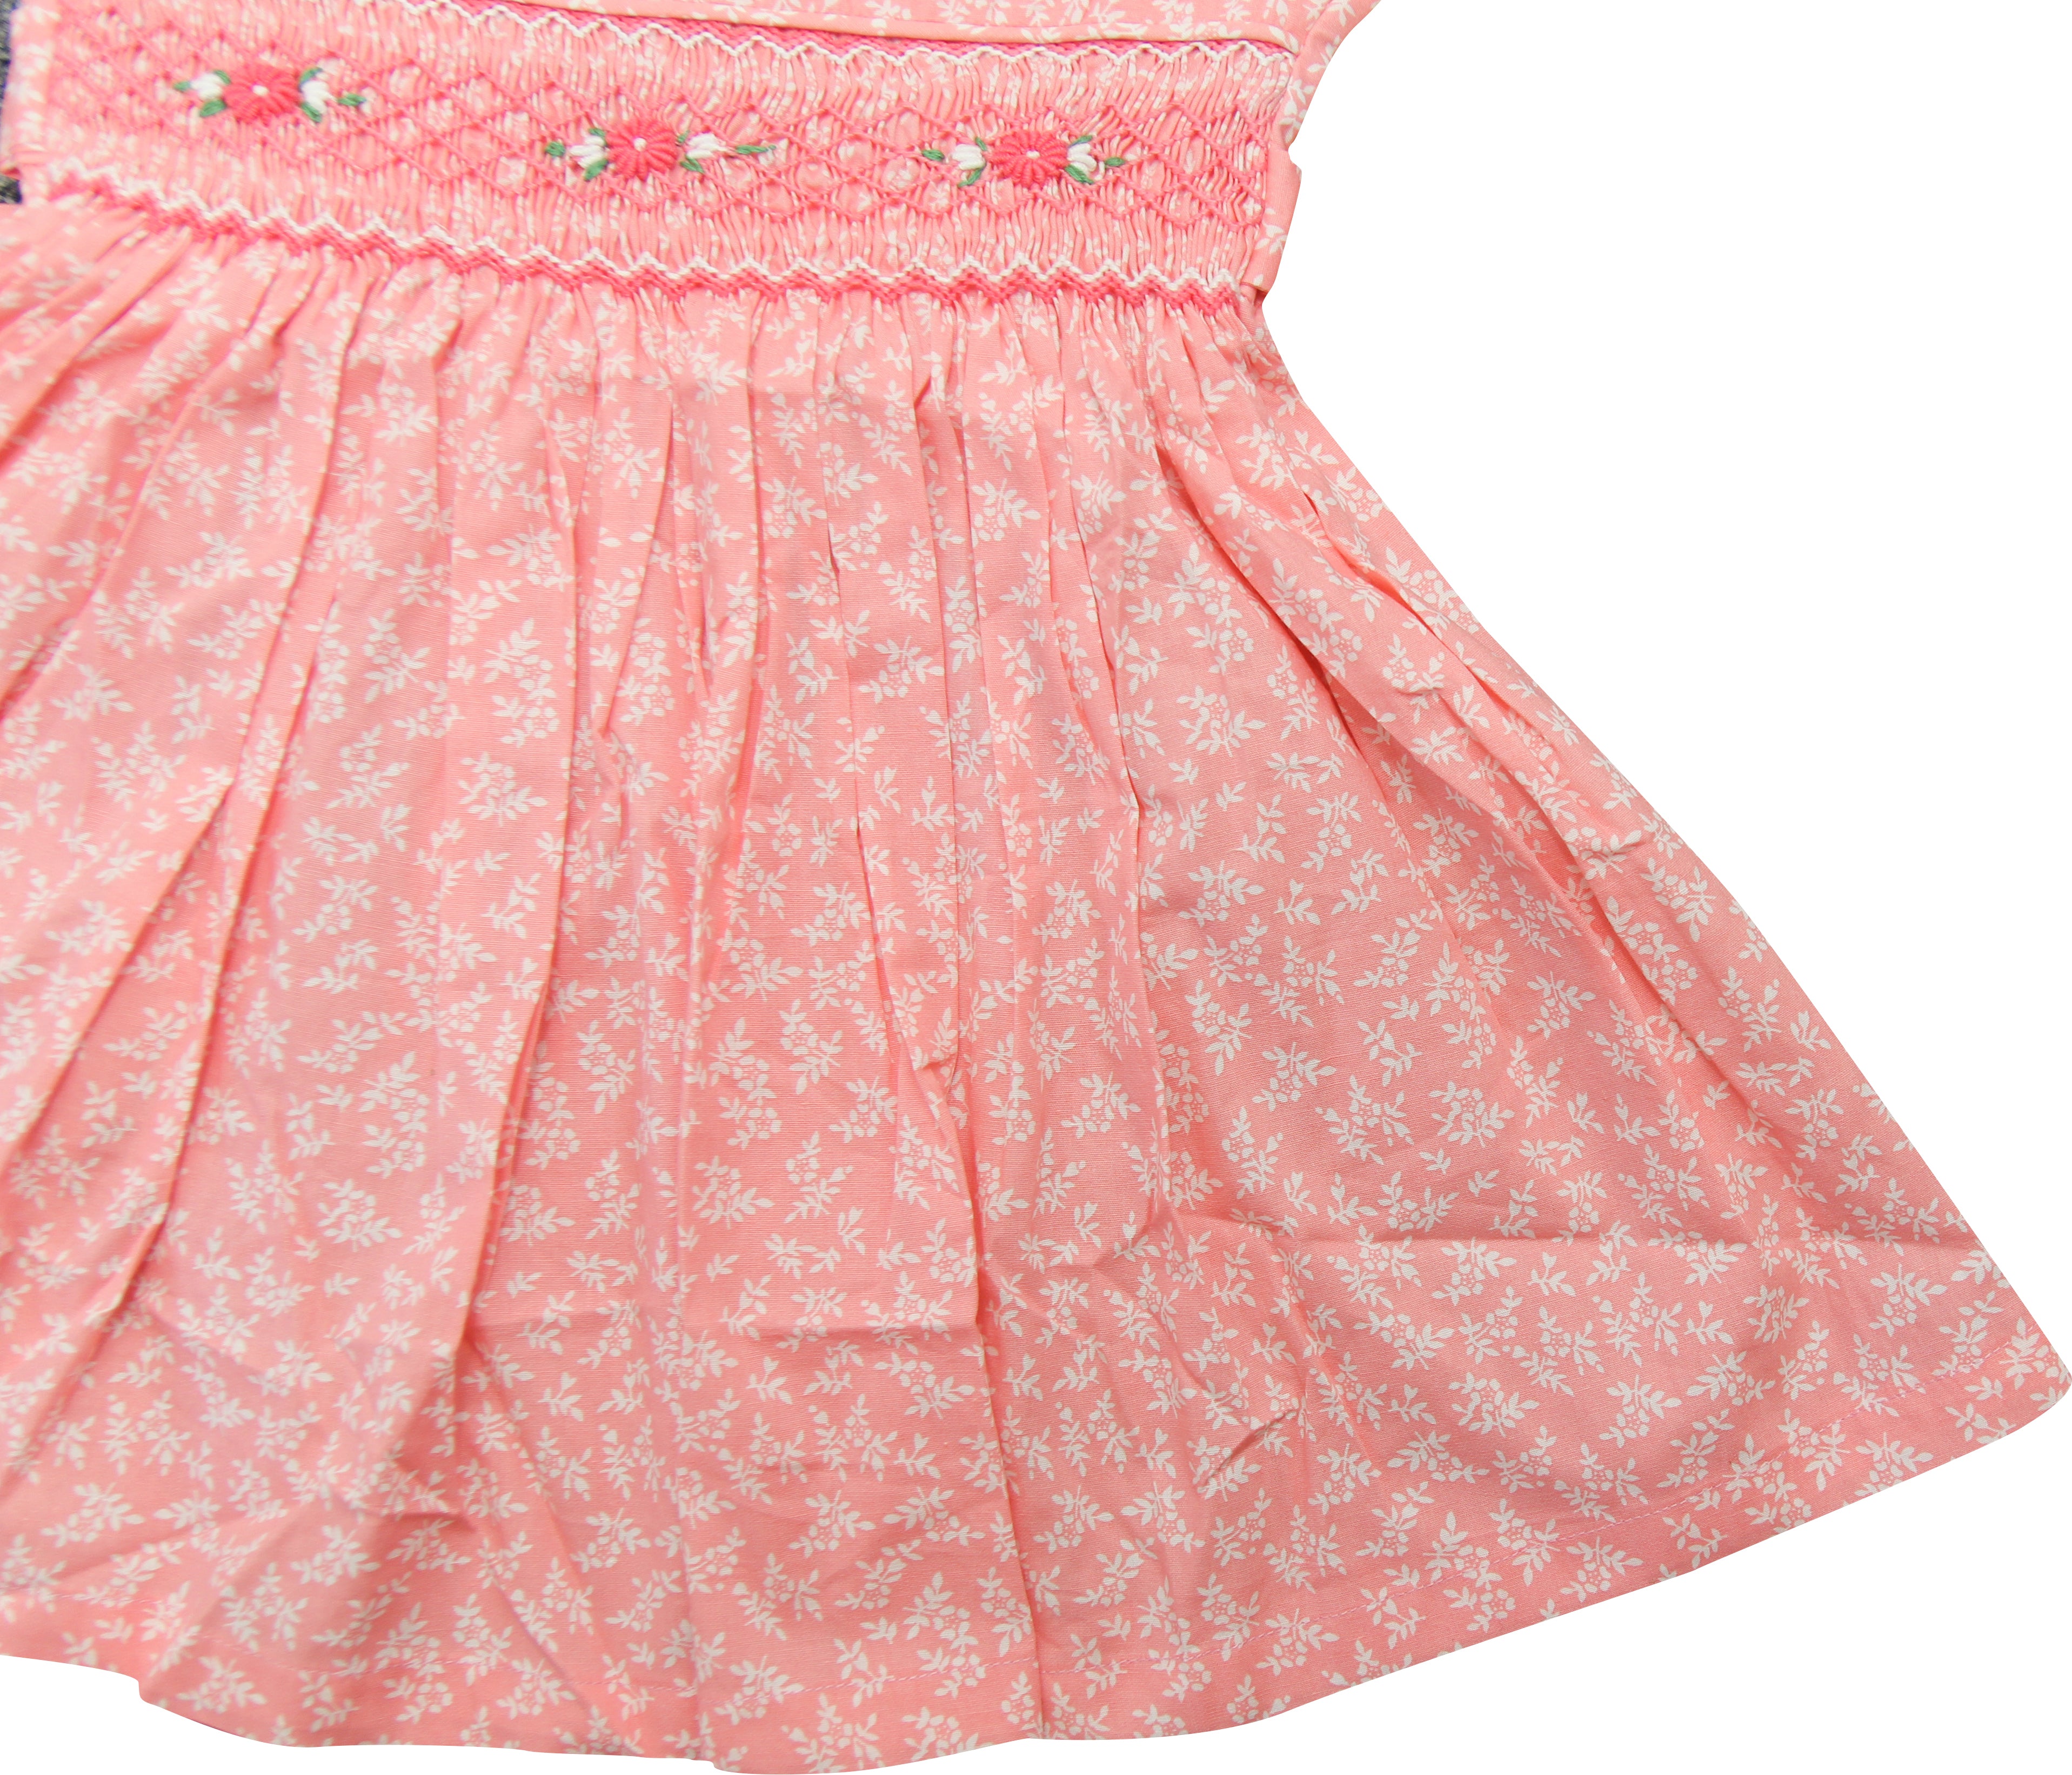 Baby Toddler Little Girls Spring Summer Floral Geometric Smocked Dress - Coral - Angeline Kids